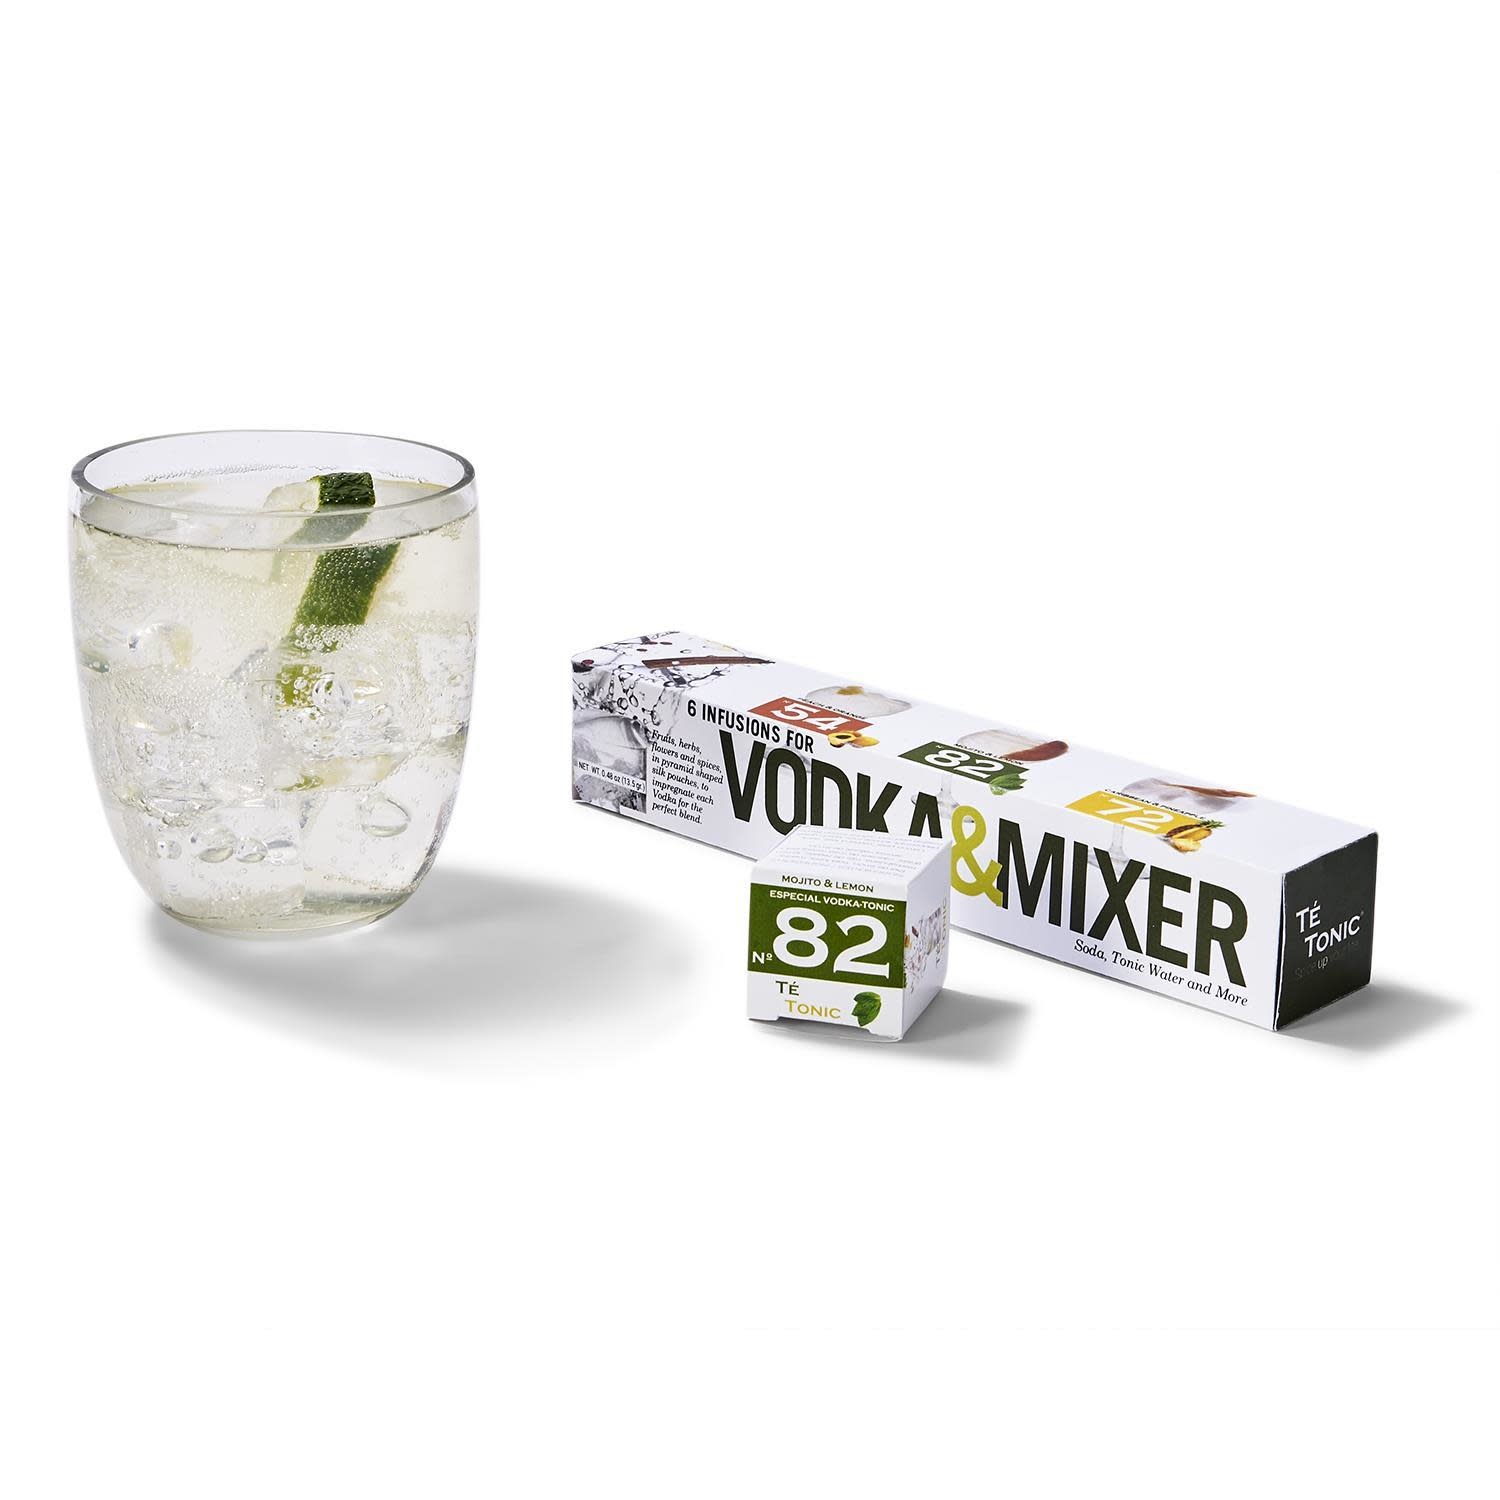 Tetonic 6 Flavor Vodka & Mixer